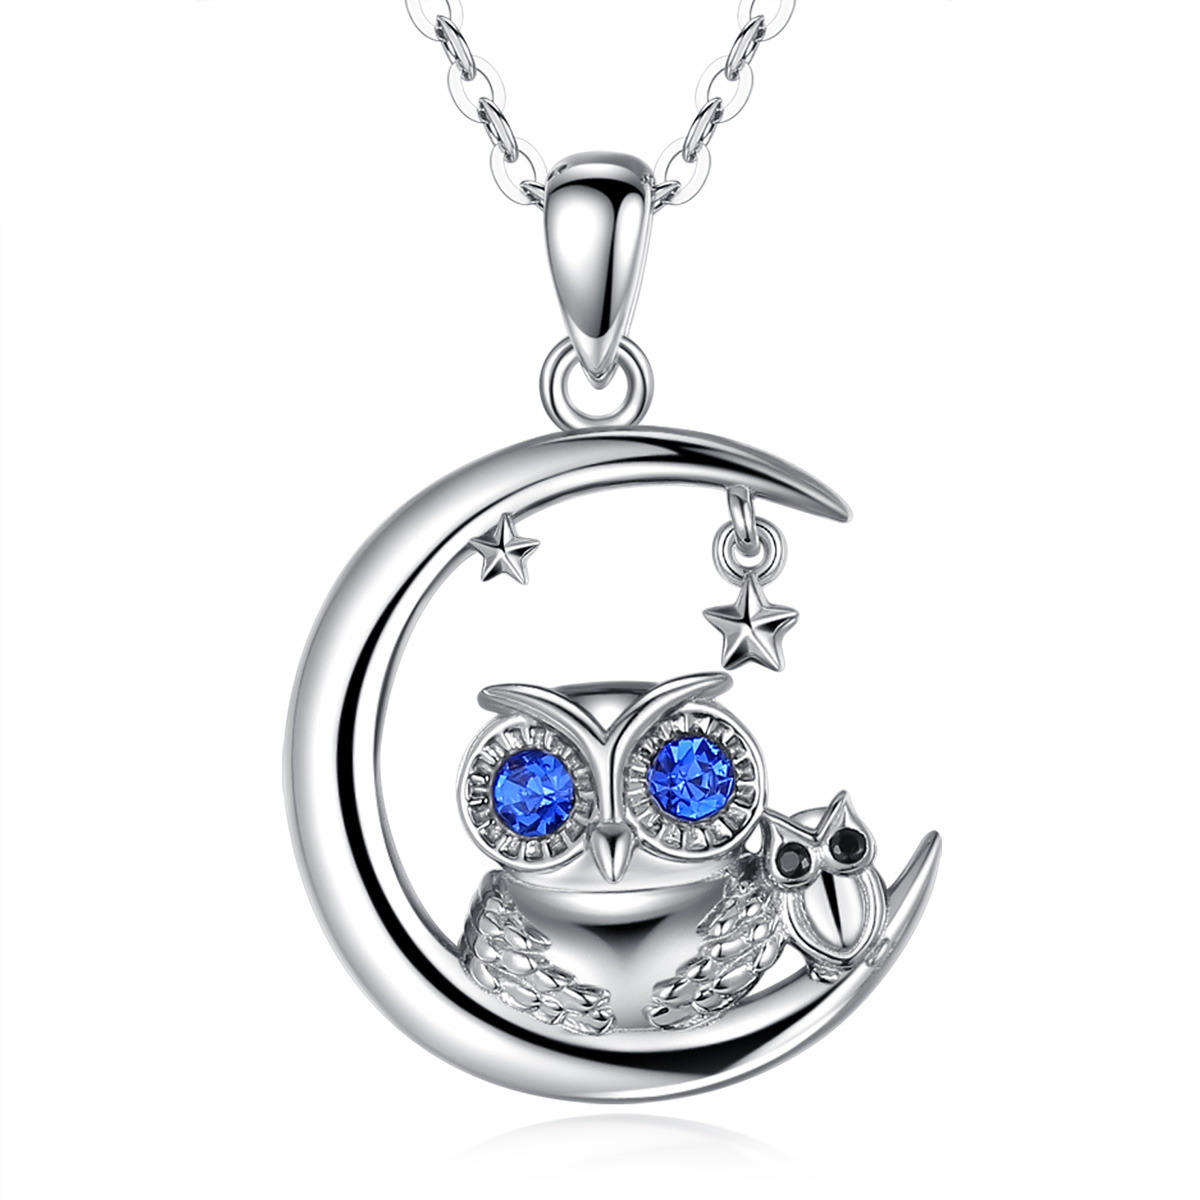 Merryshine Jewelry Rhodium Plated S925 Sterling Silver Add Blue Cubic Zirconia Owl Luxury Charm Pendant